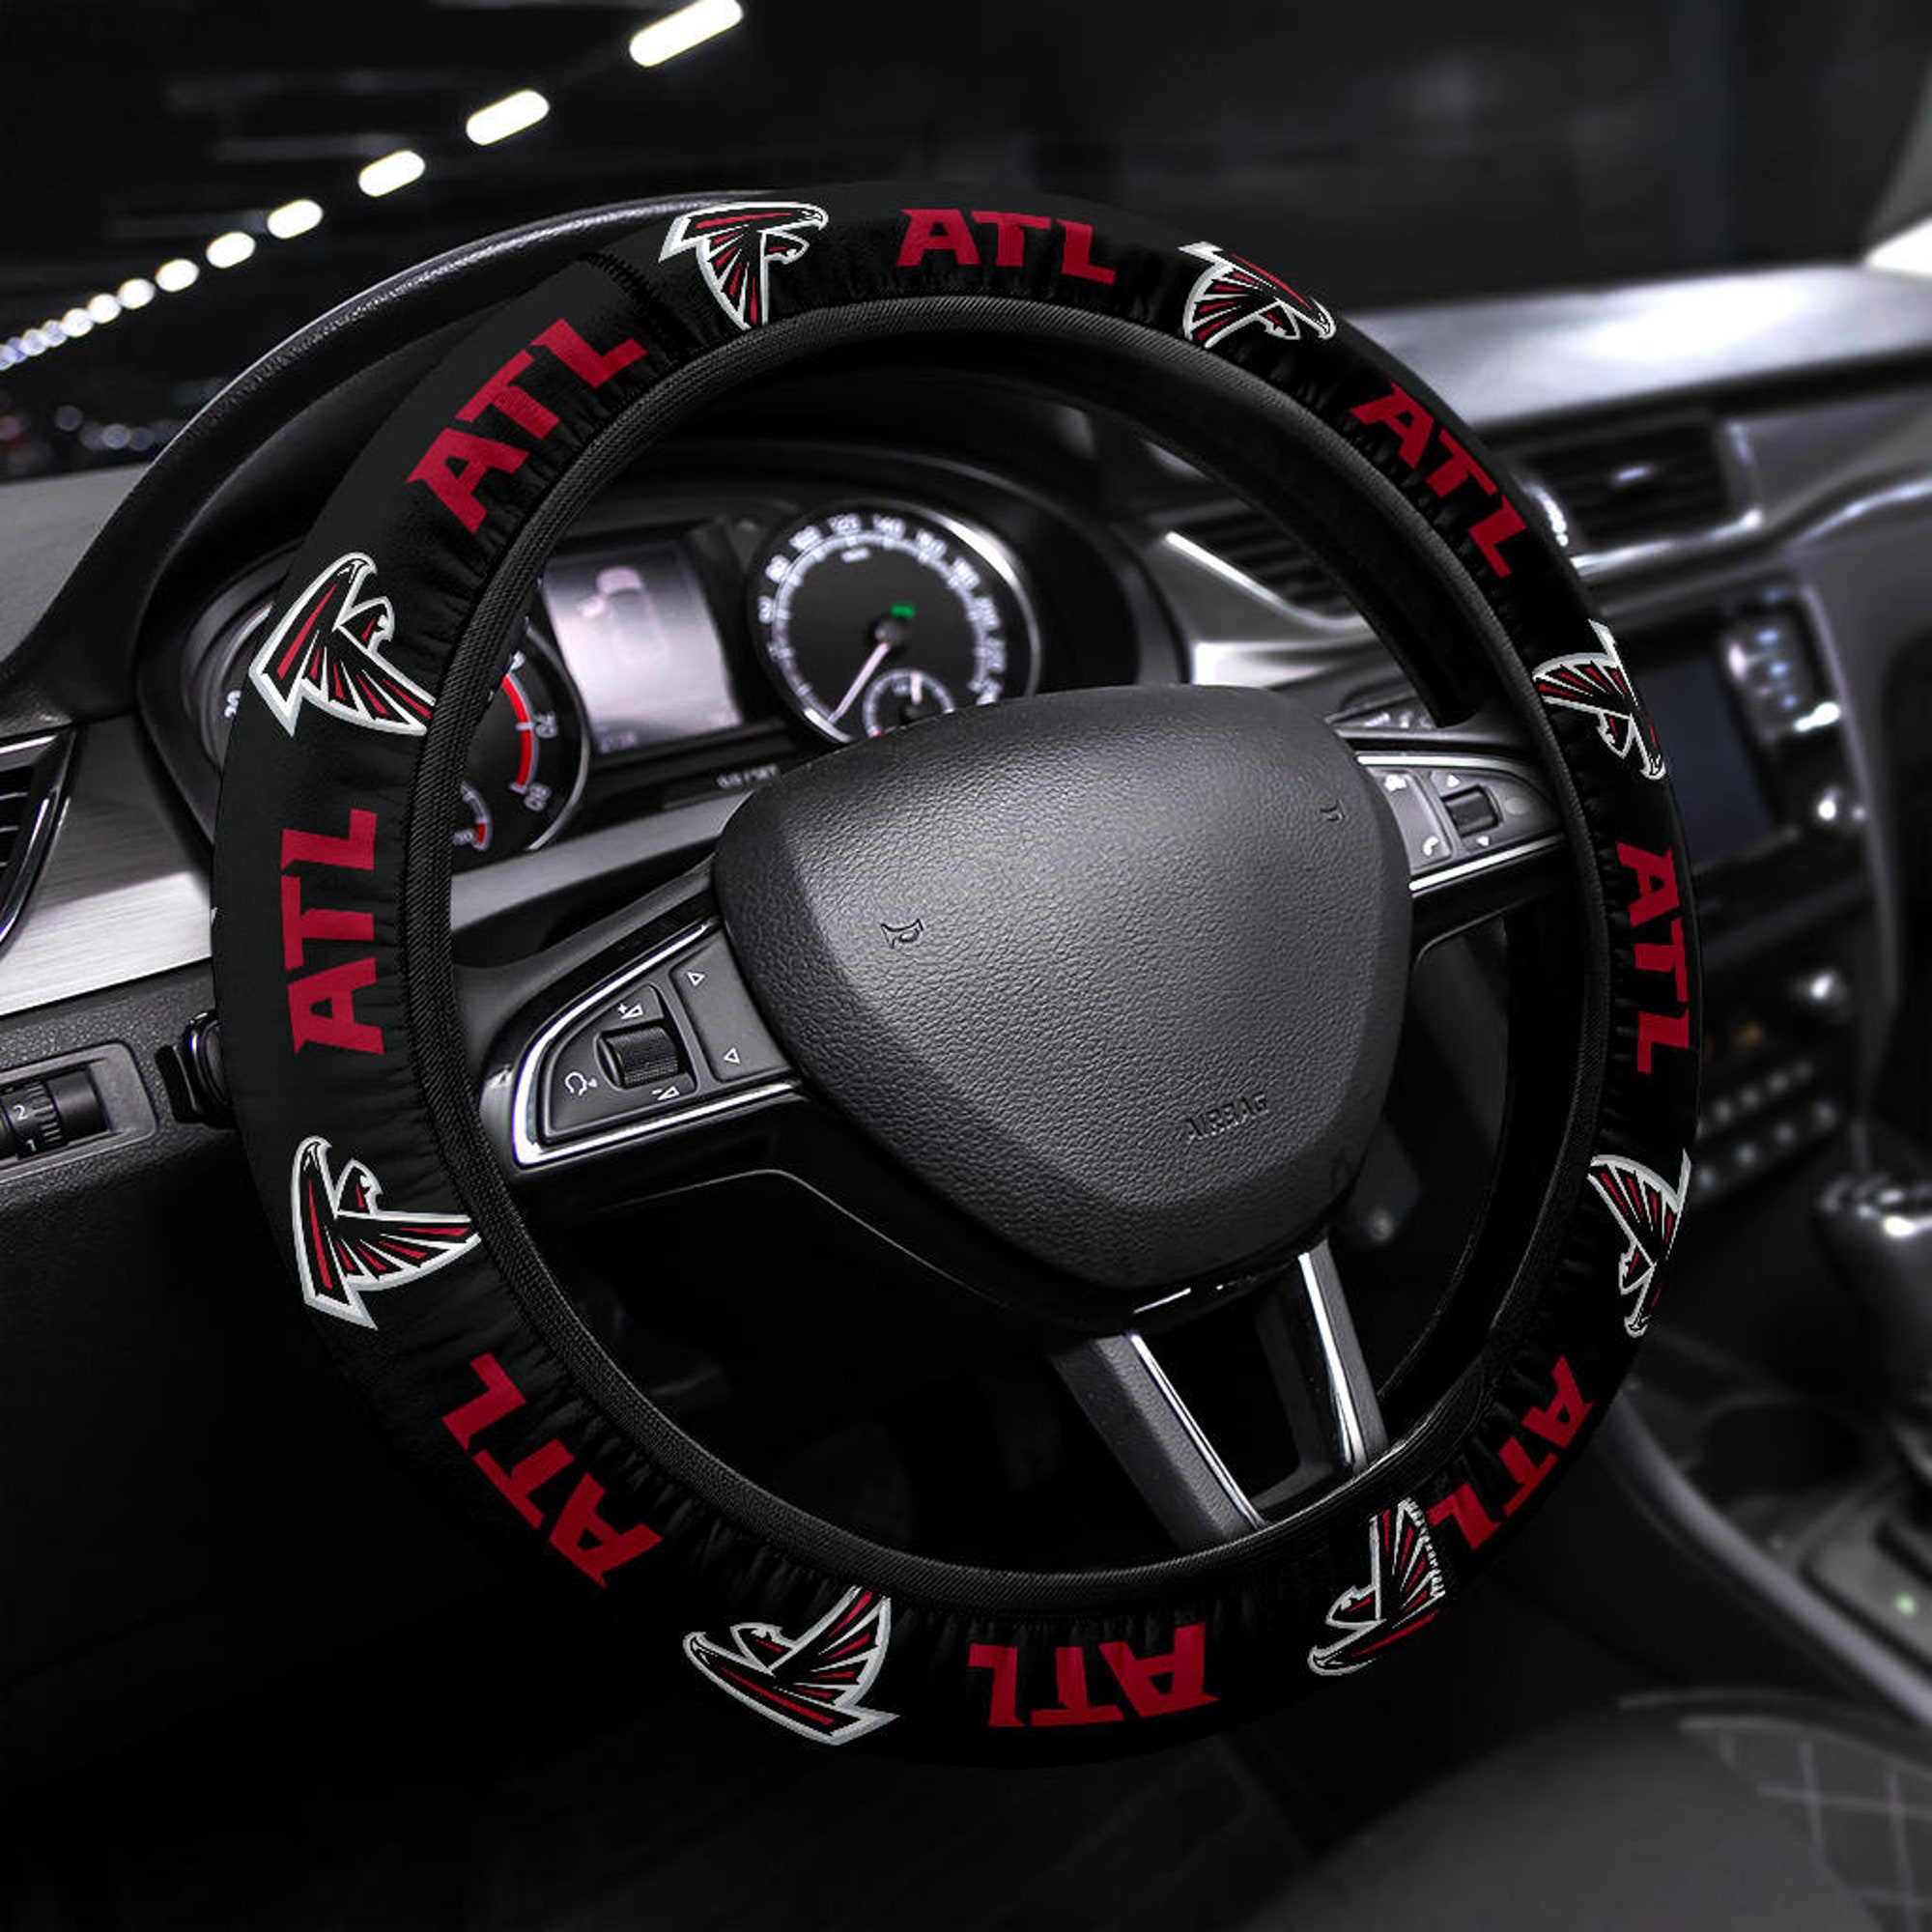 Atlanta Falcons themed custom steering wheel cover for a fan